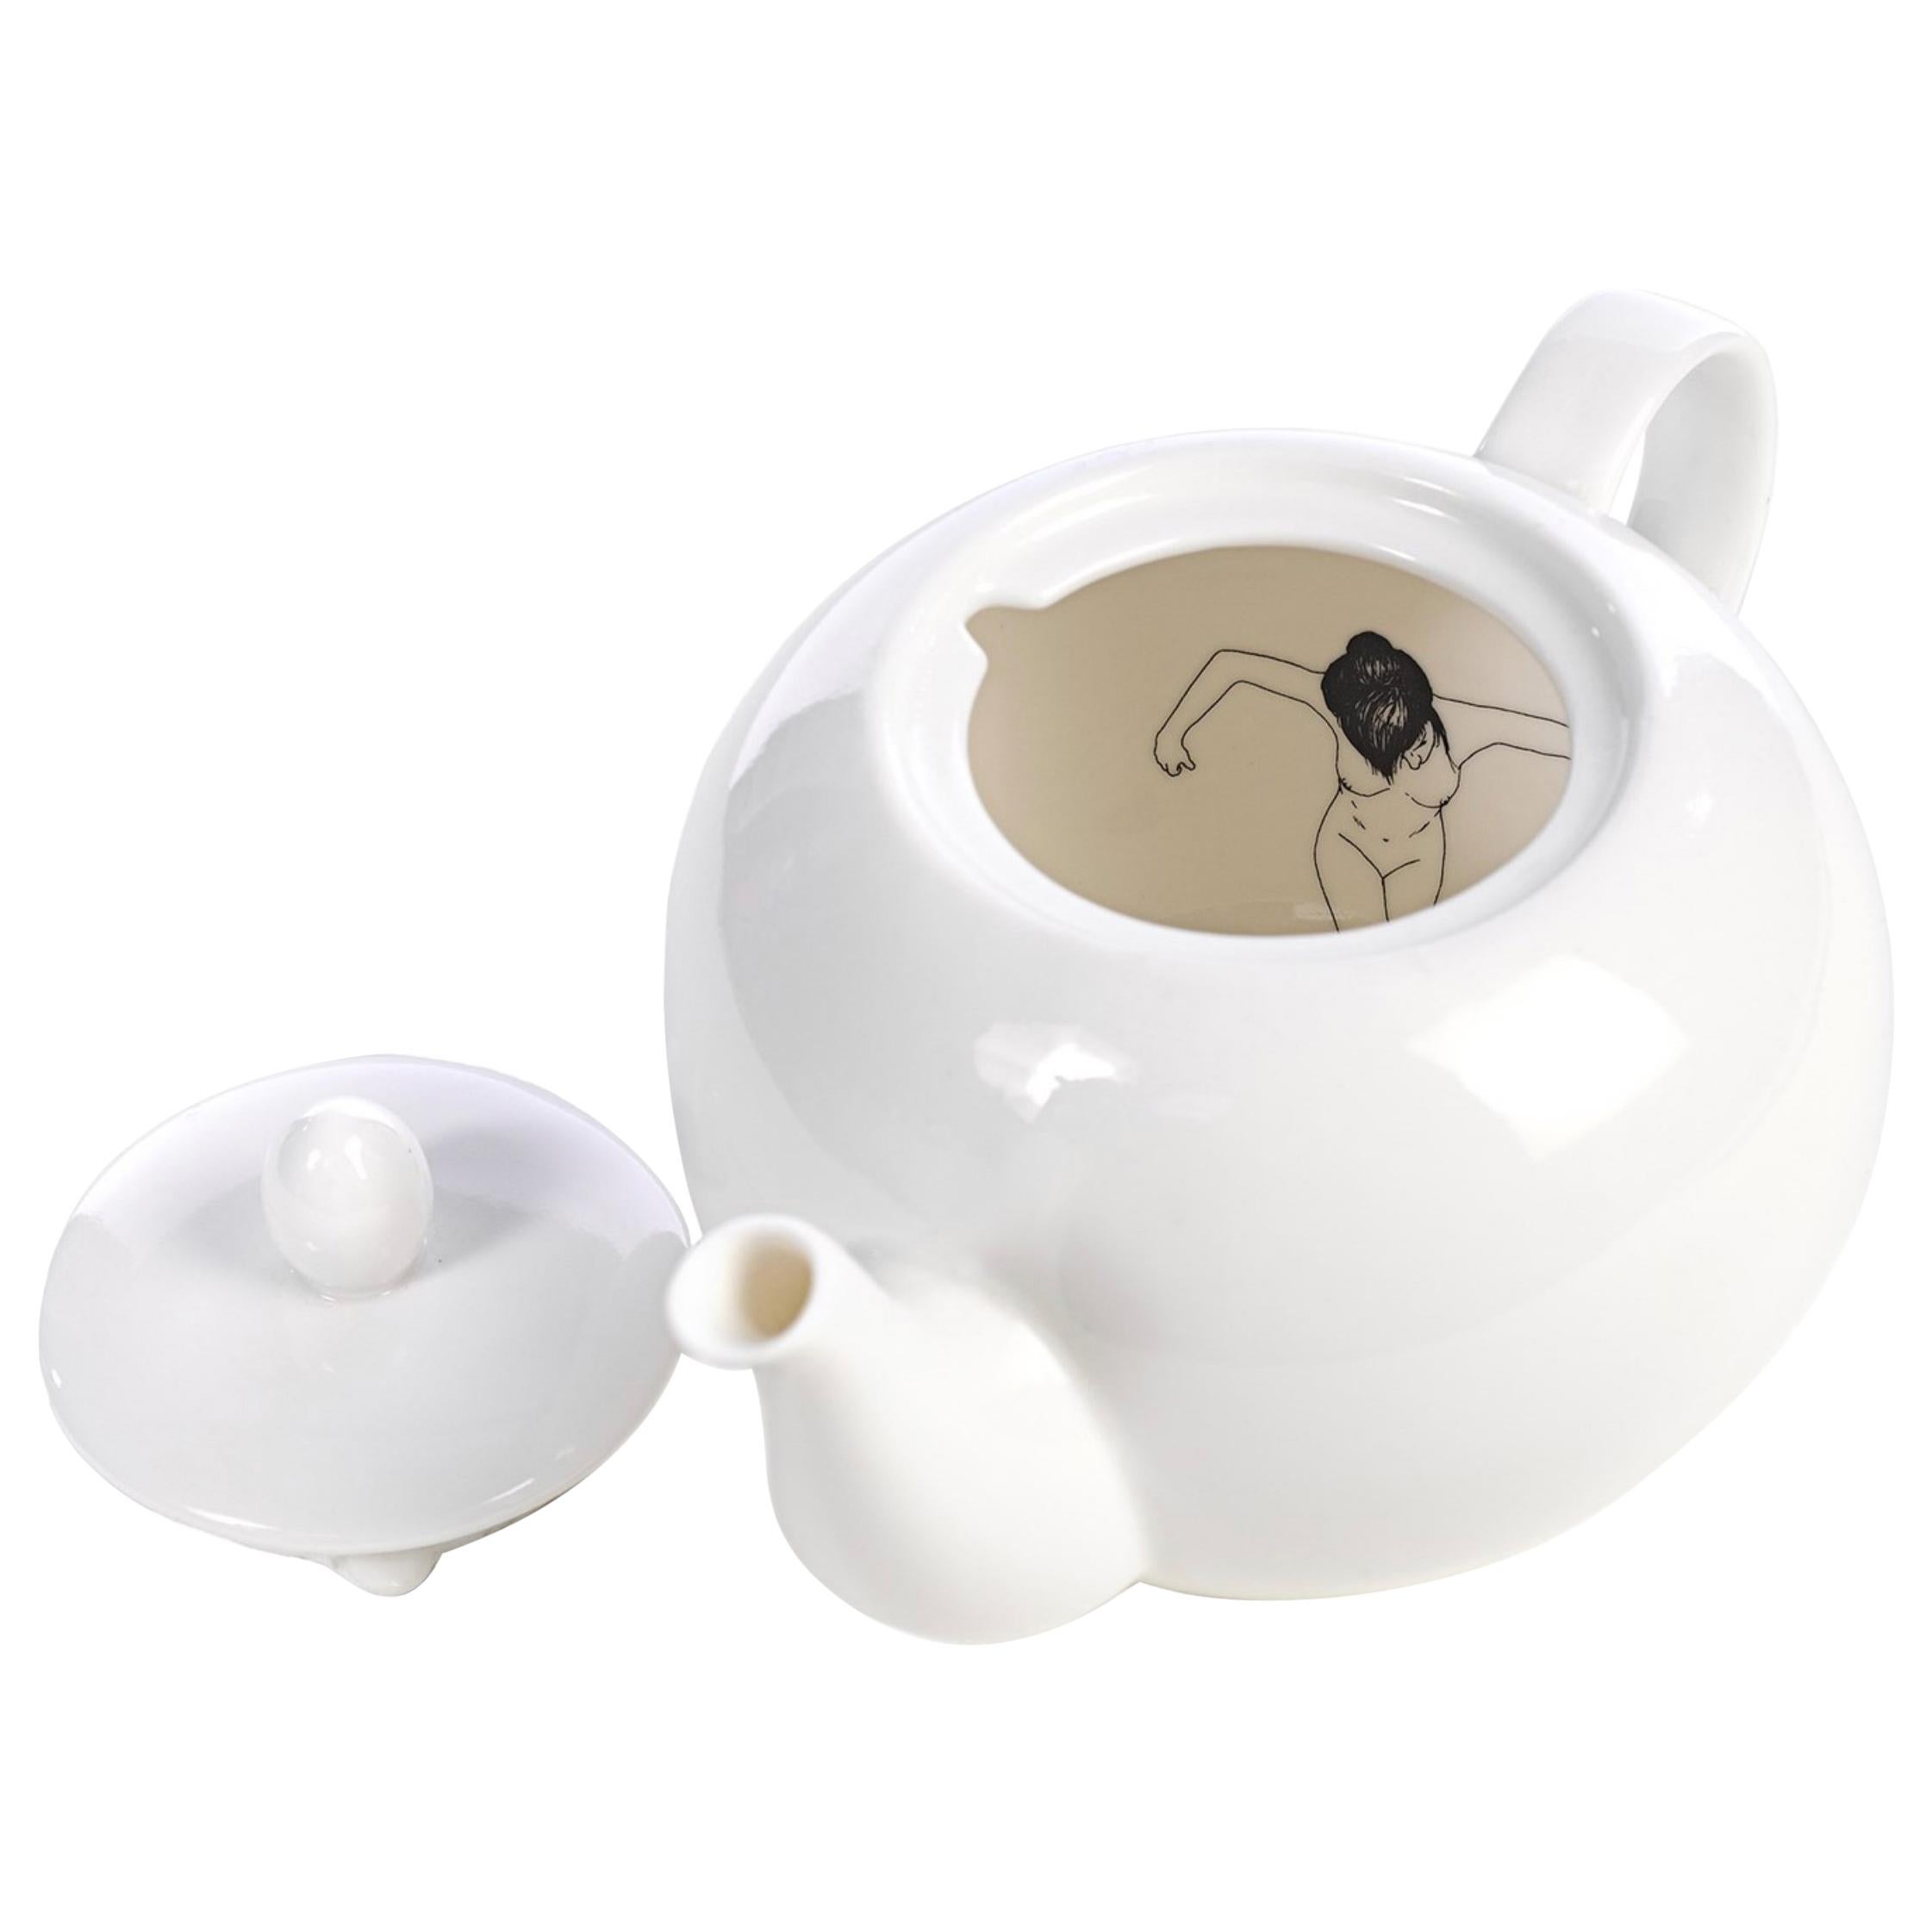 Porcelain Tea Pot with Undressed Woman For Sale